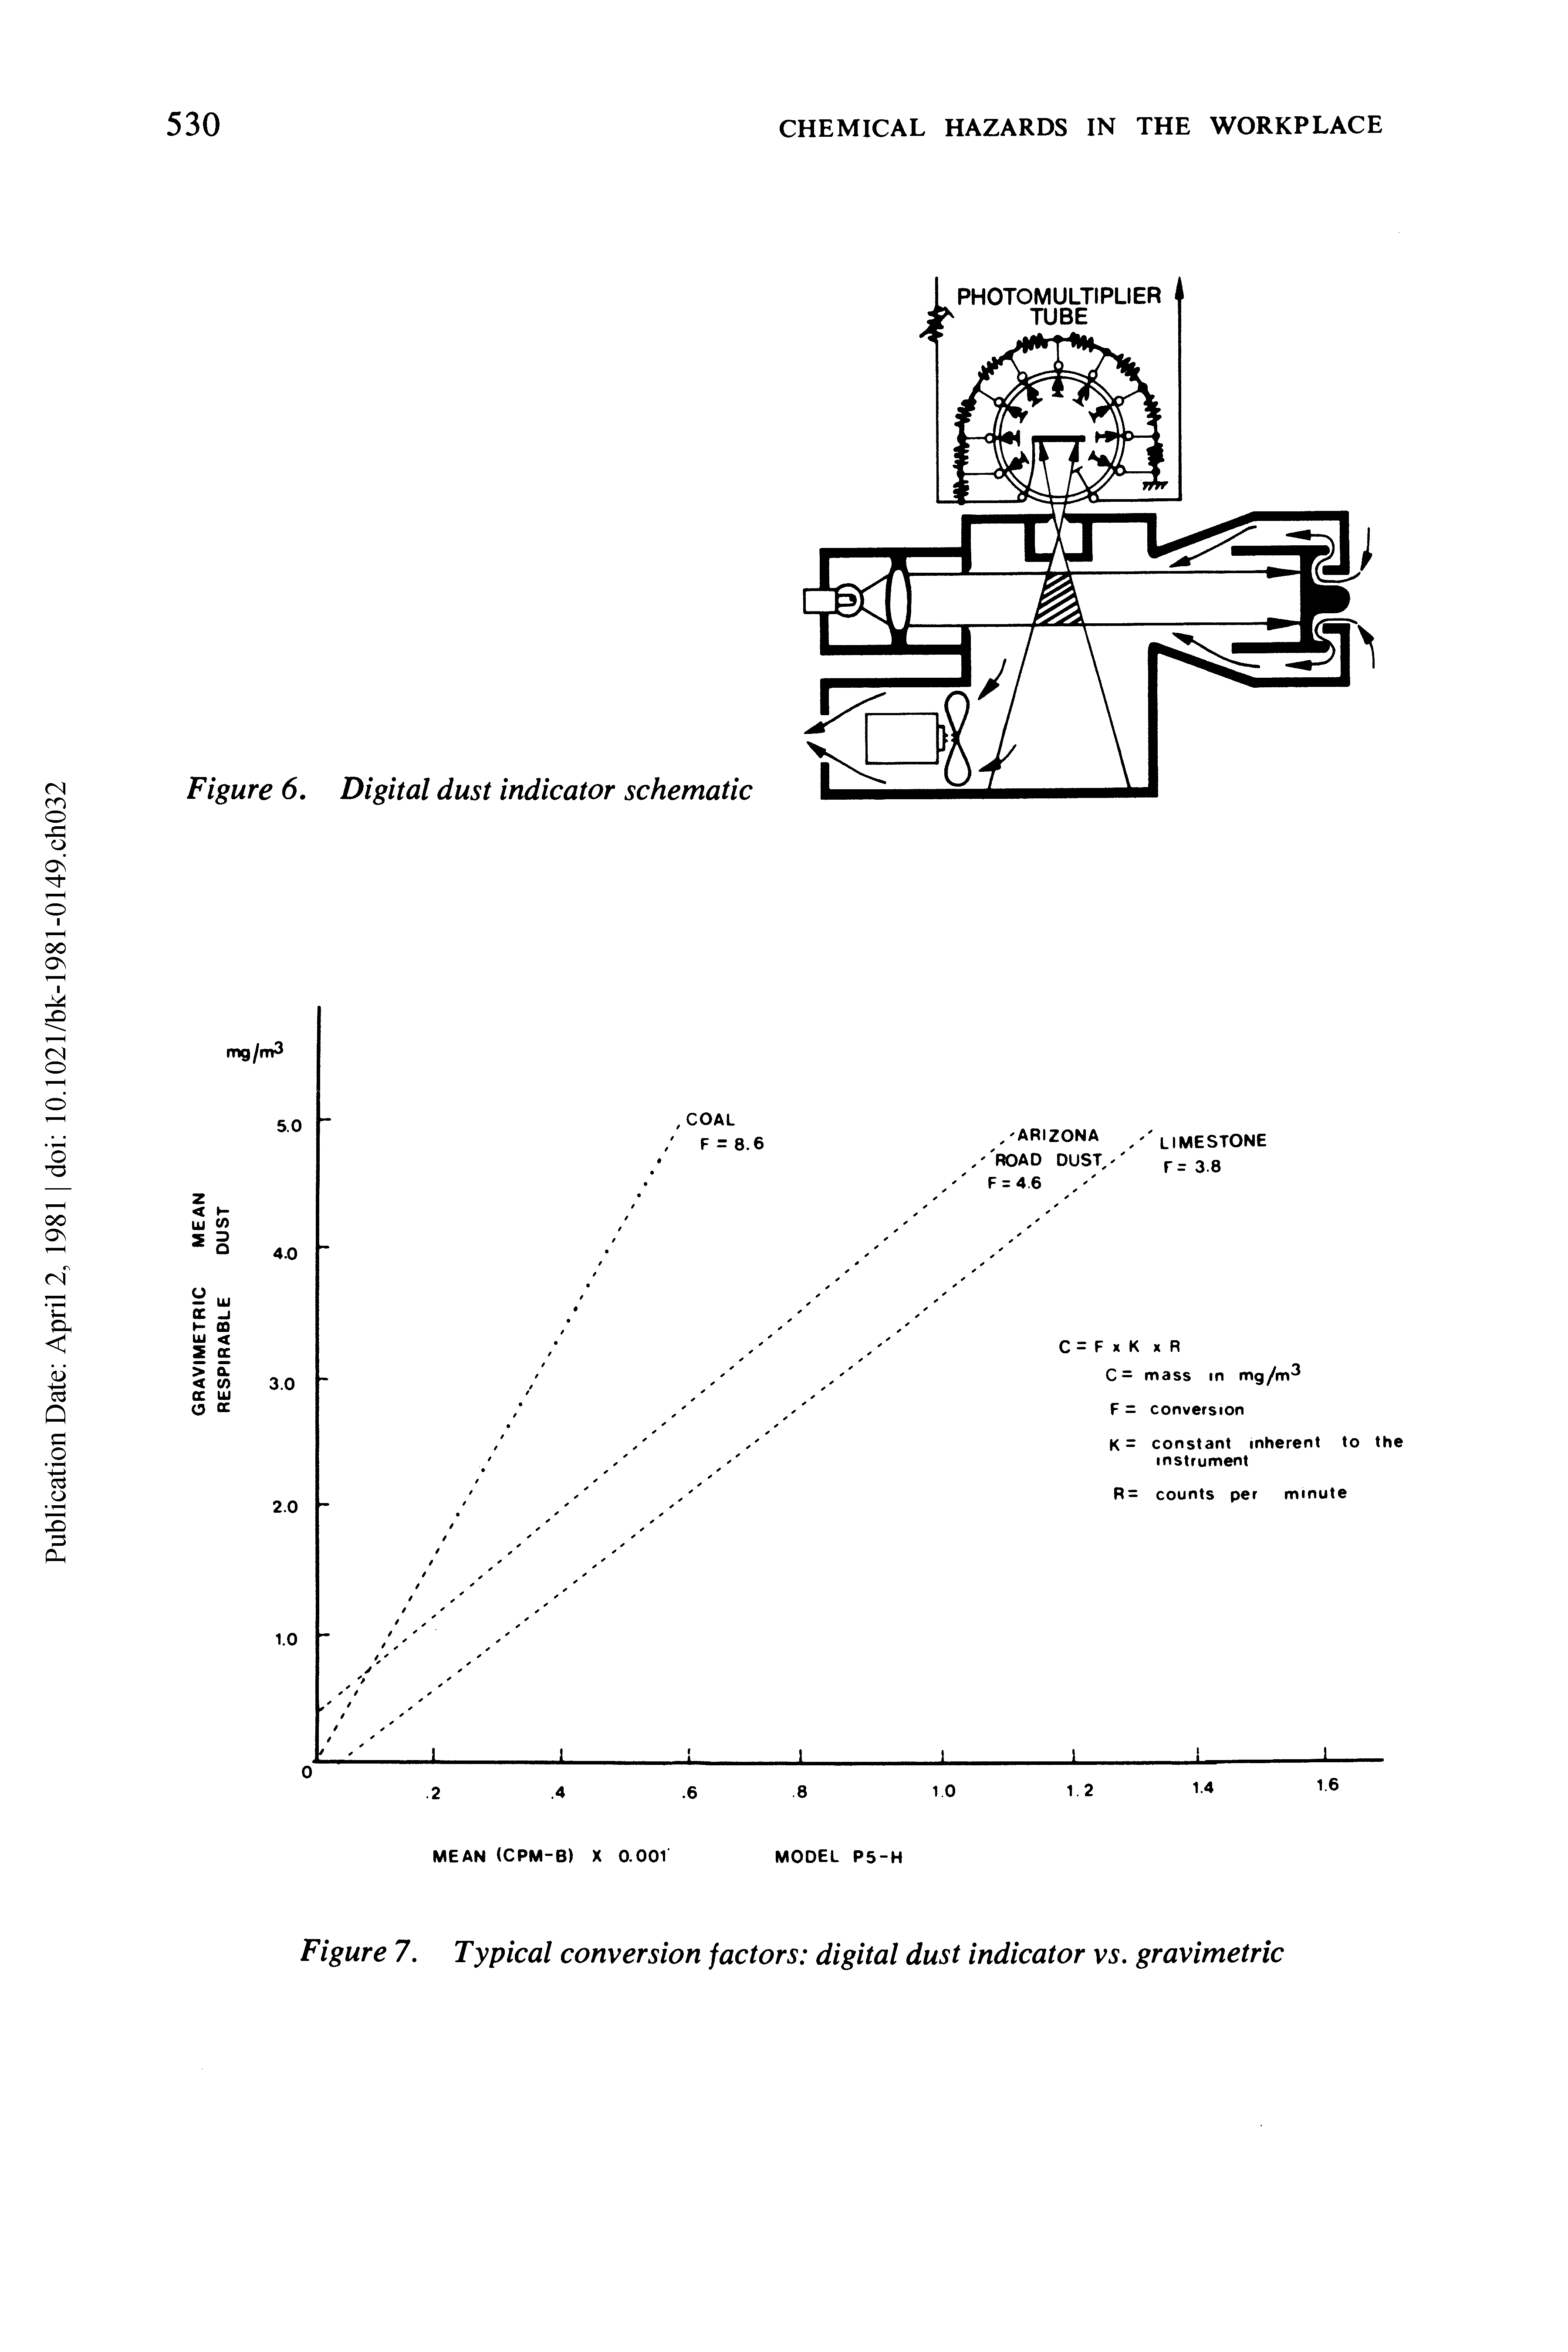 Figure 7. Typical conversion factors digital dust indicator vs. gravimetric...